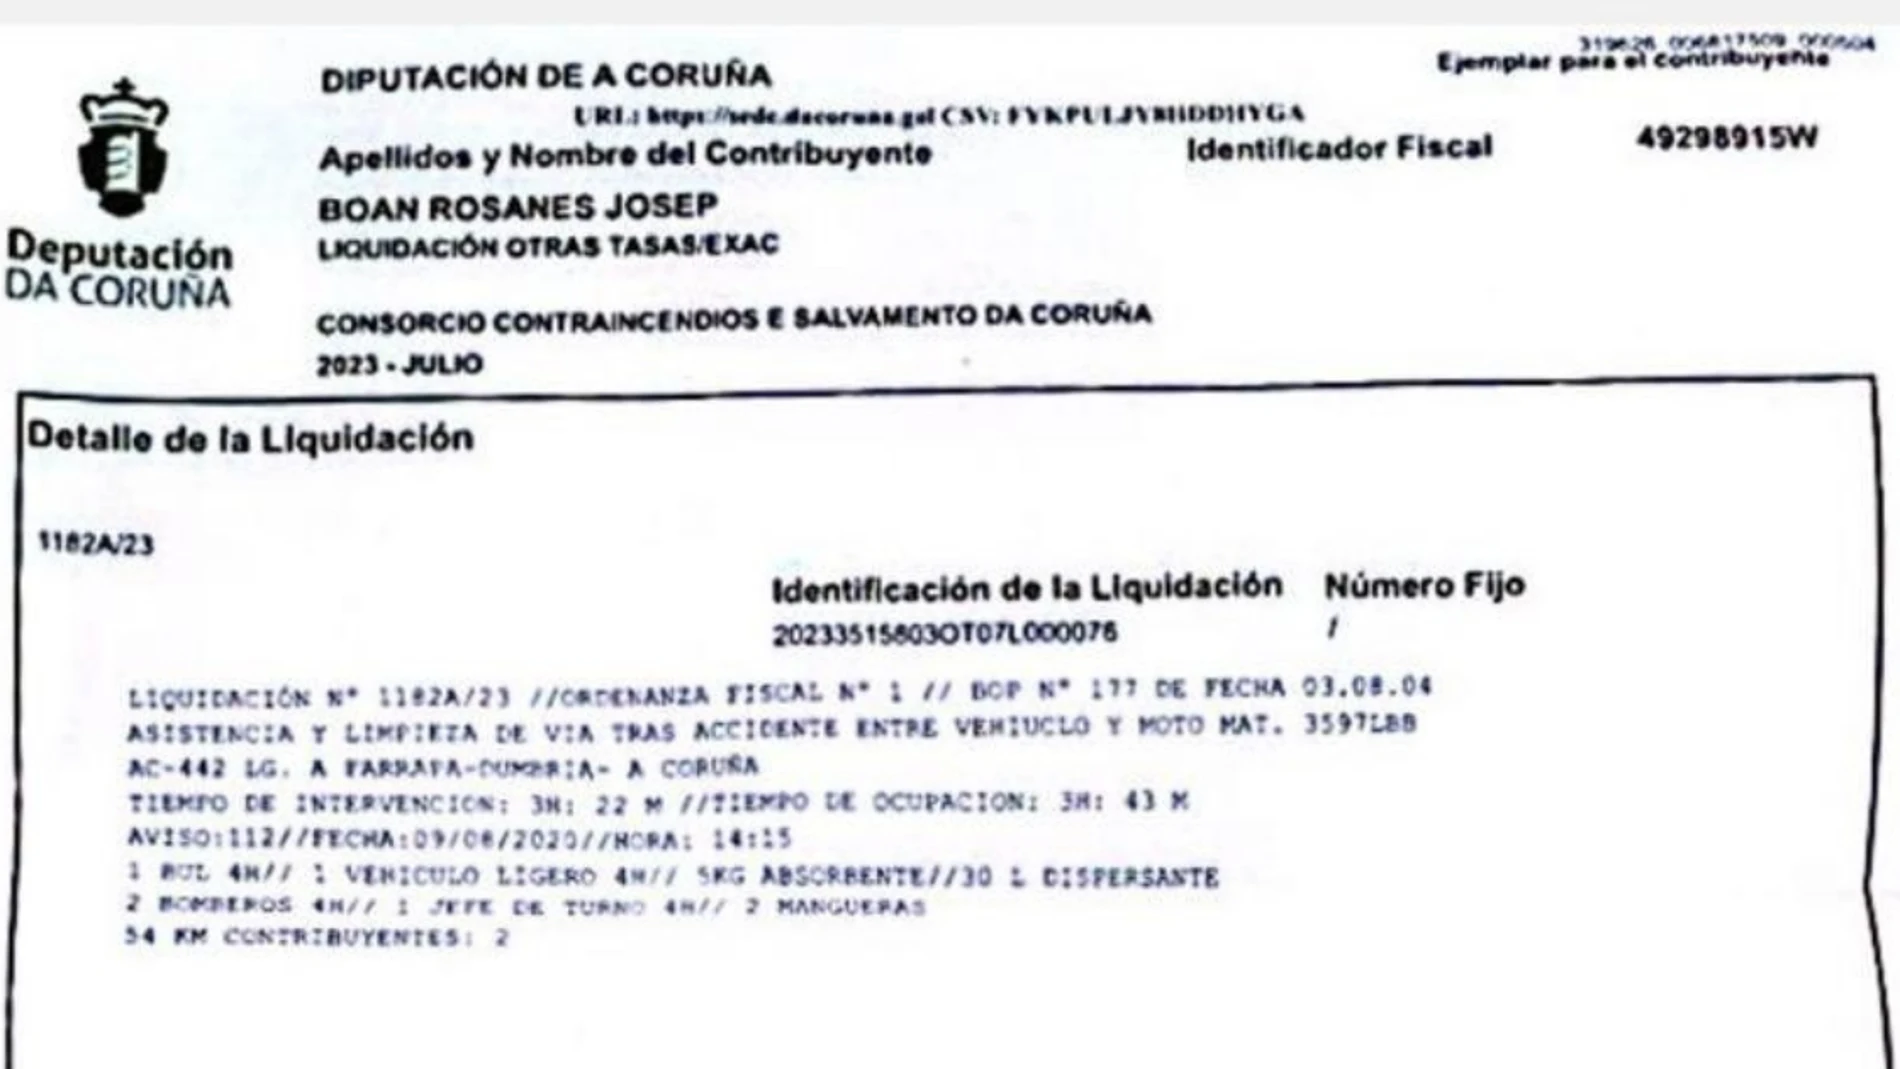 Factura de la Diputación de Coruña